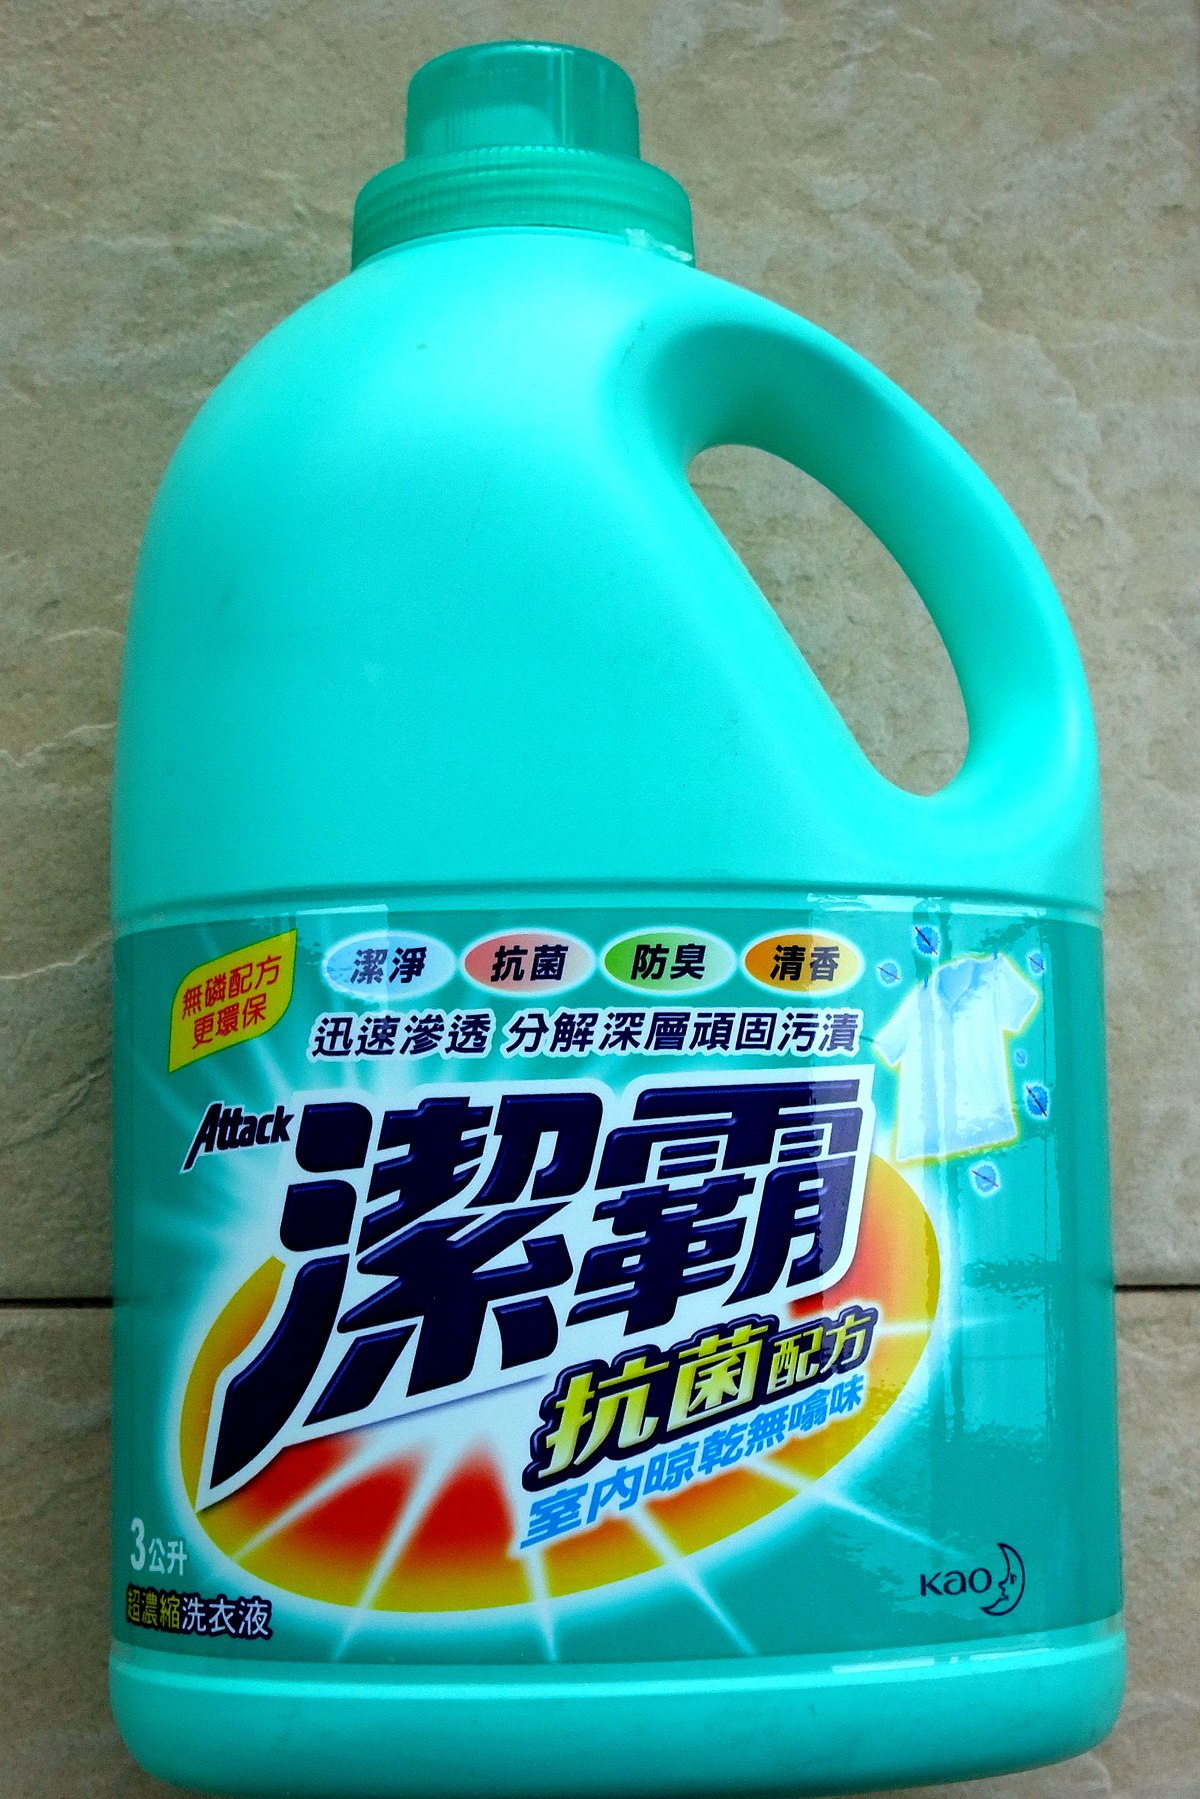 https://upload.wikimedia.org/wikipedia/commons/thumb/0/06/Liquid_detergent.JPG/1200px-Liquid_detergent.JPG